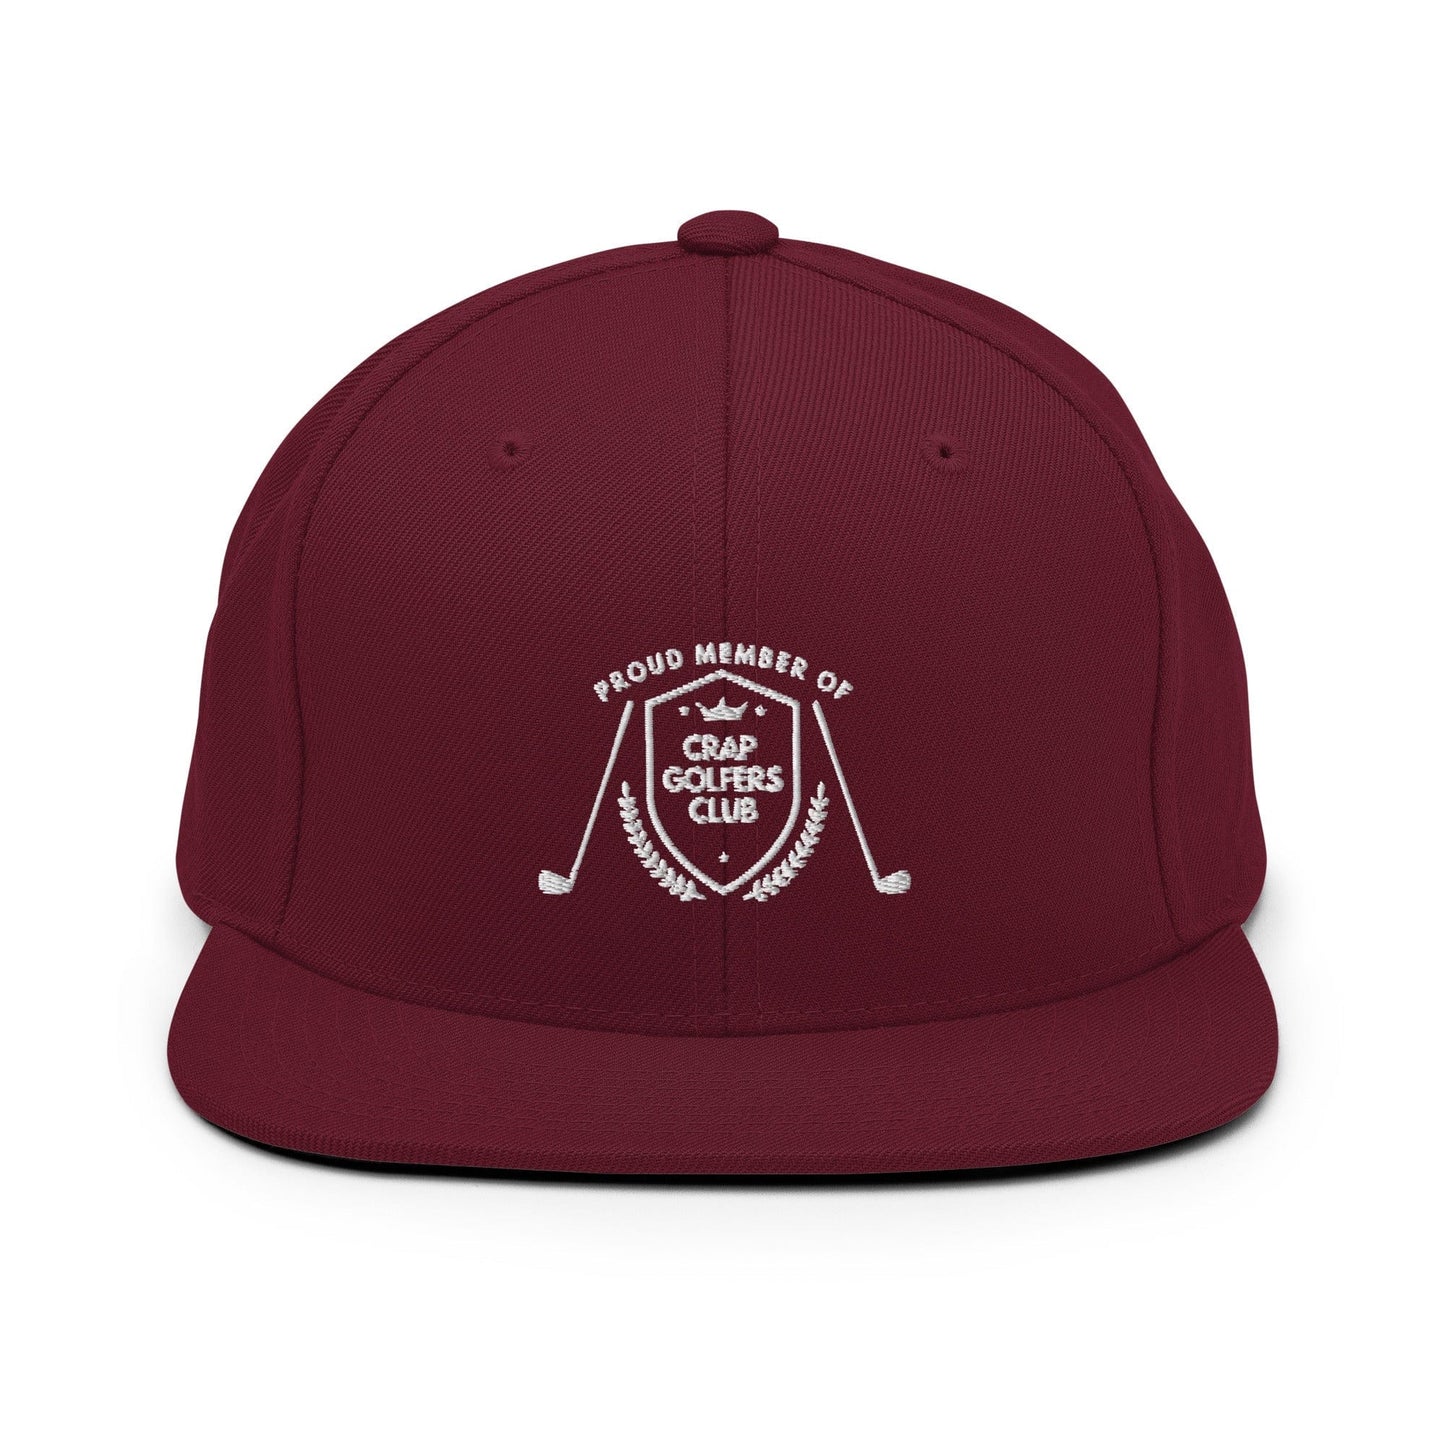 Funny Golfer Gifts  Snapback Hat Maroon Crap Golfers Club Snapback Hat